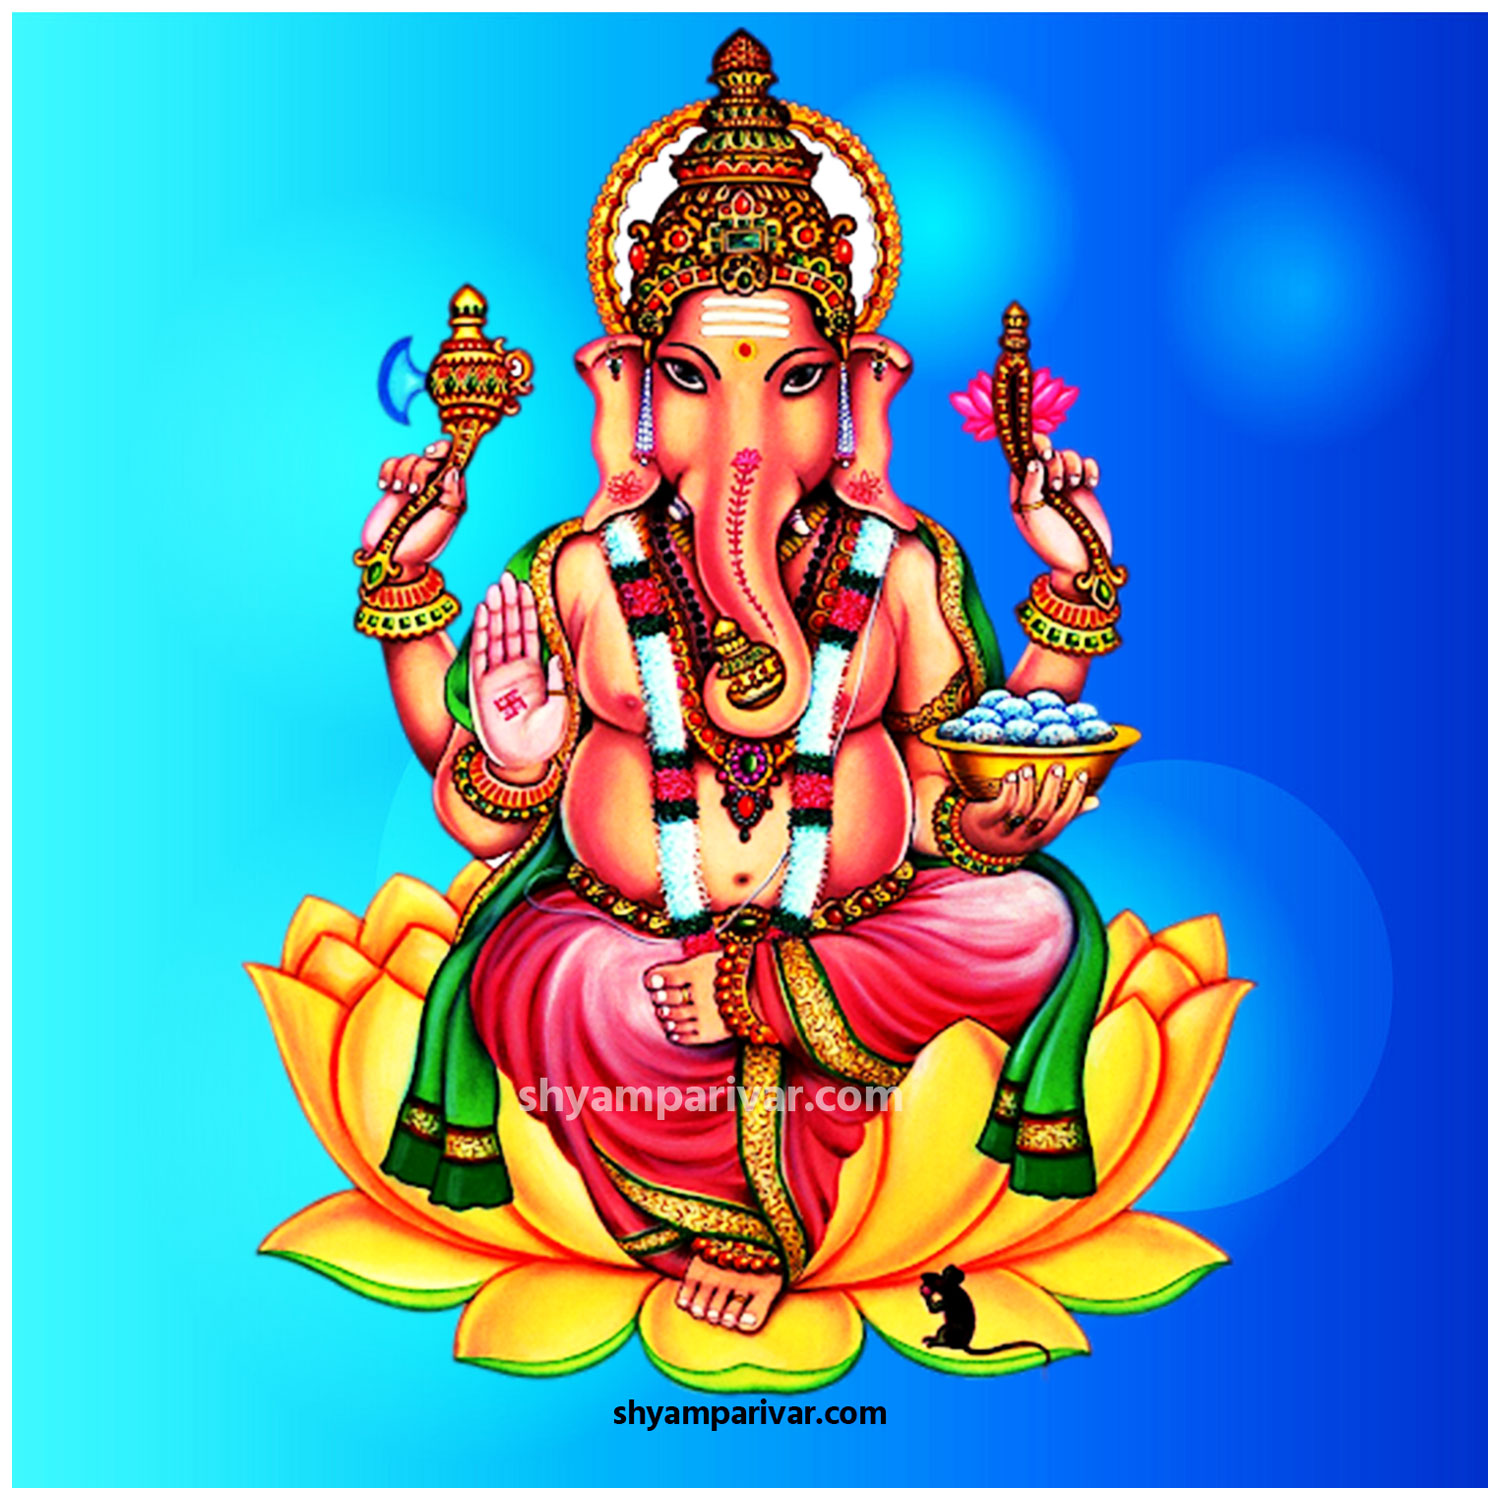 Hindu god/Goddesses images free download for mobile, photos